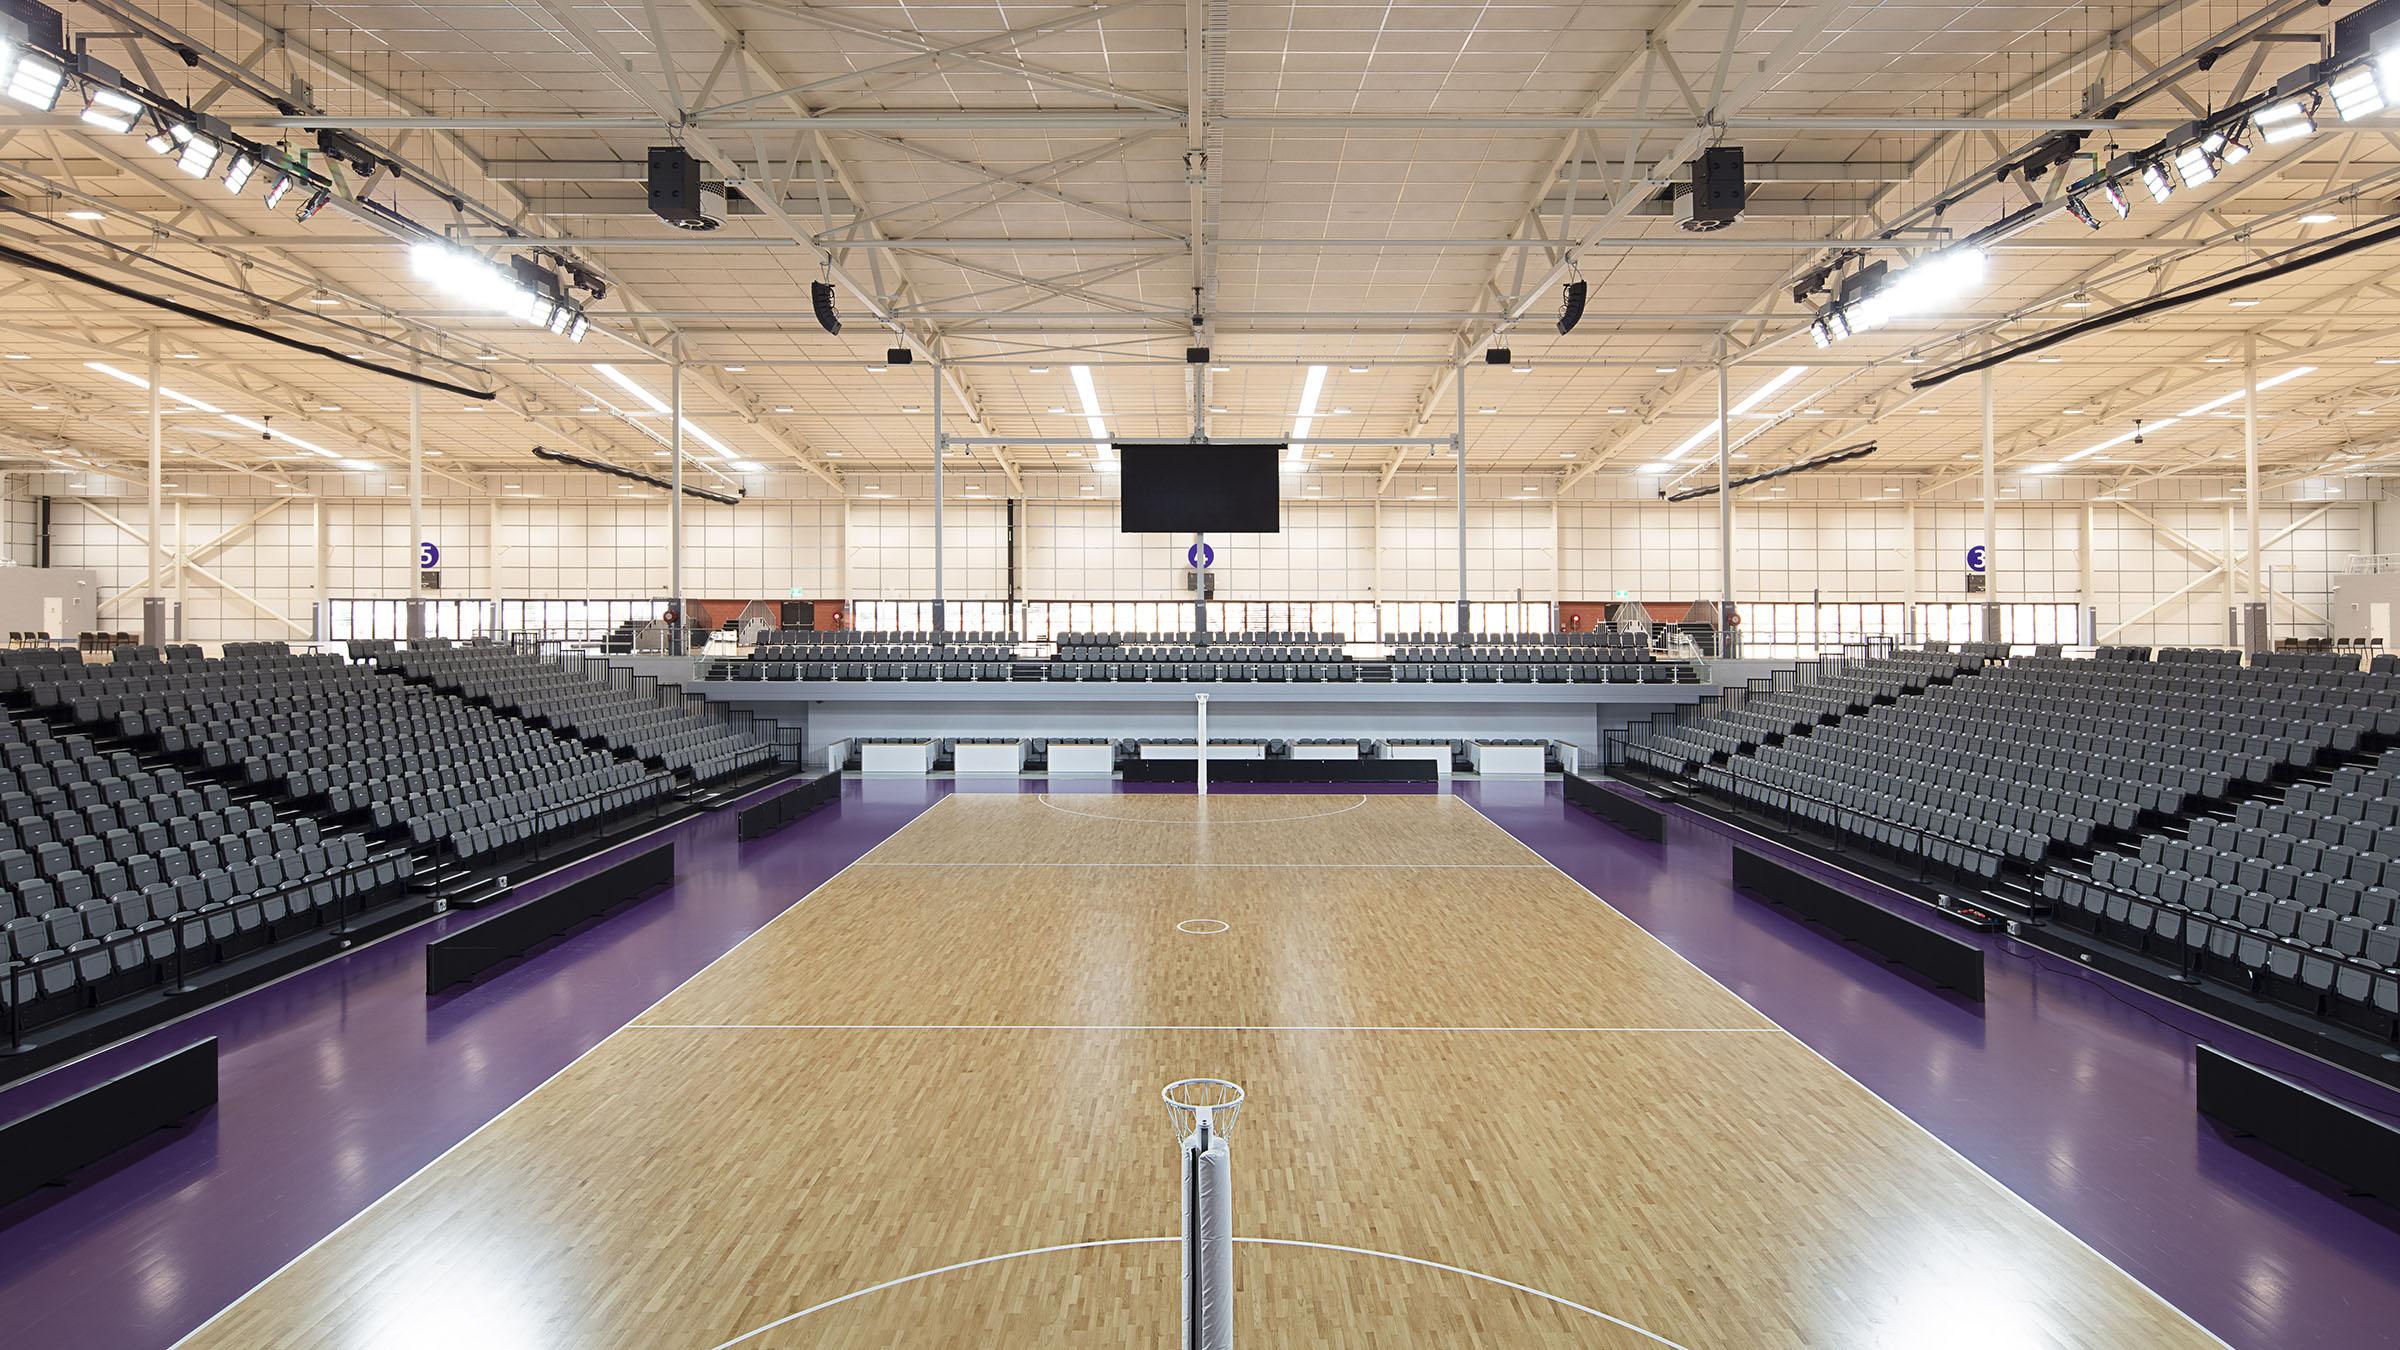 Stadium view of main court in Nissan Arena